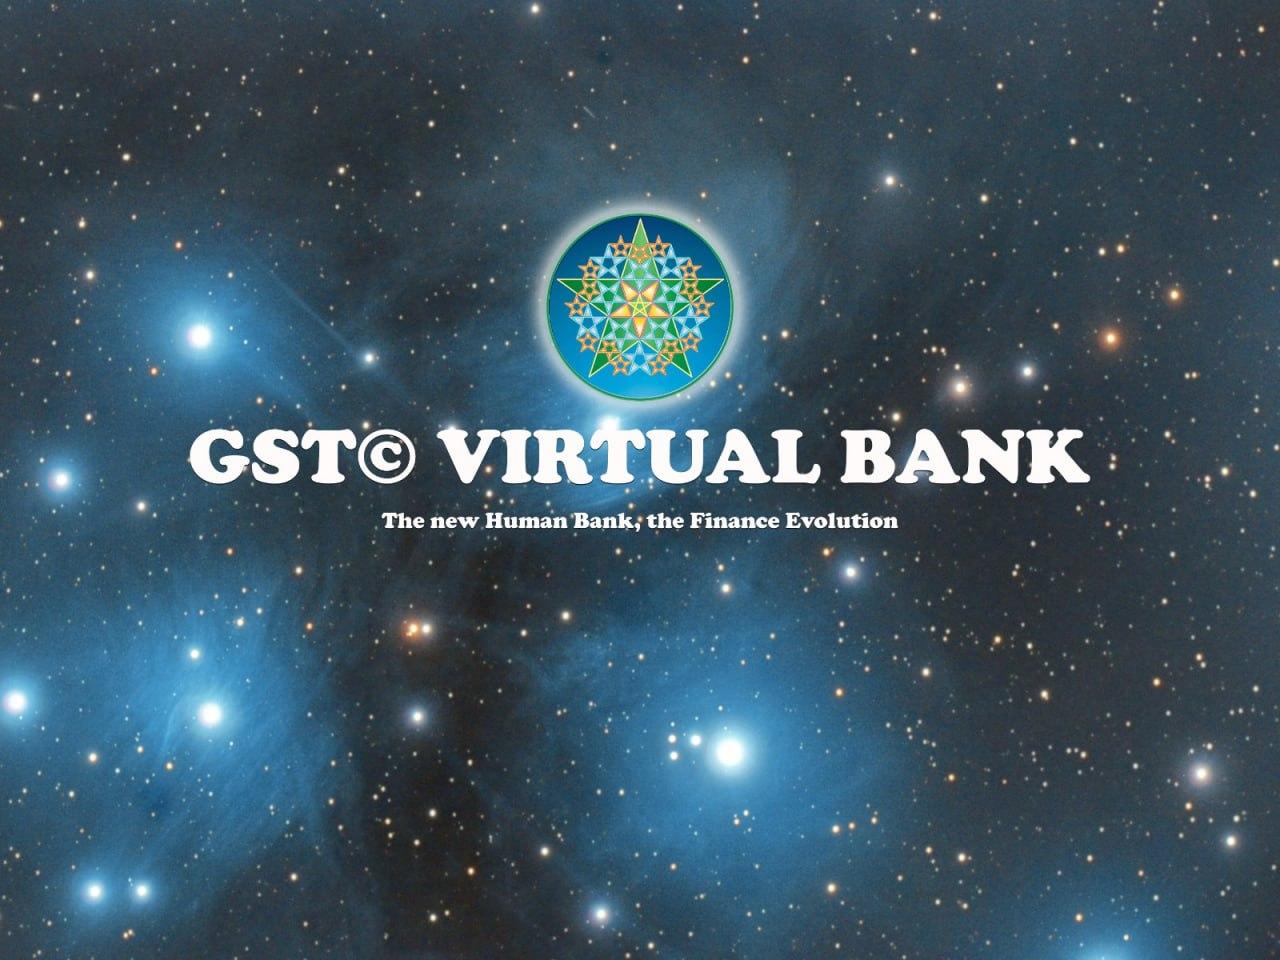 (c) Gstvirtualbank.it